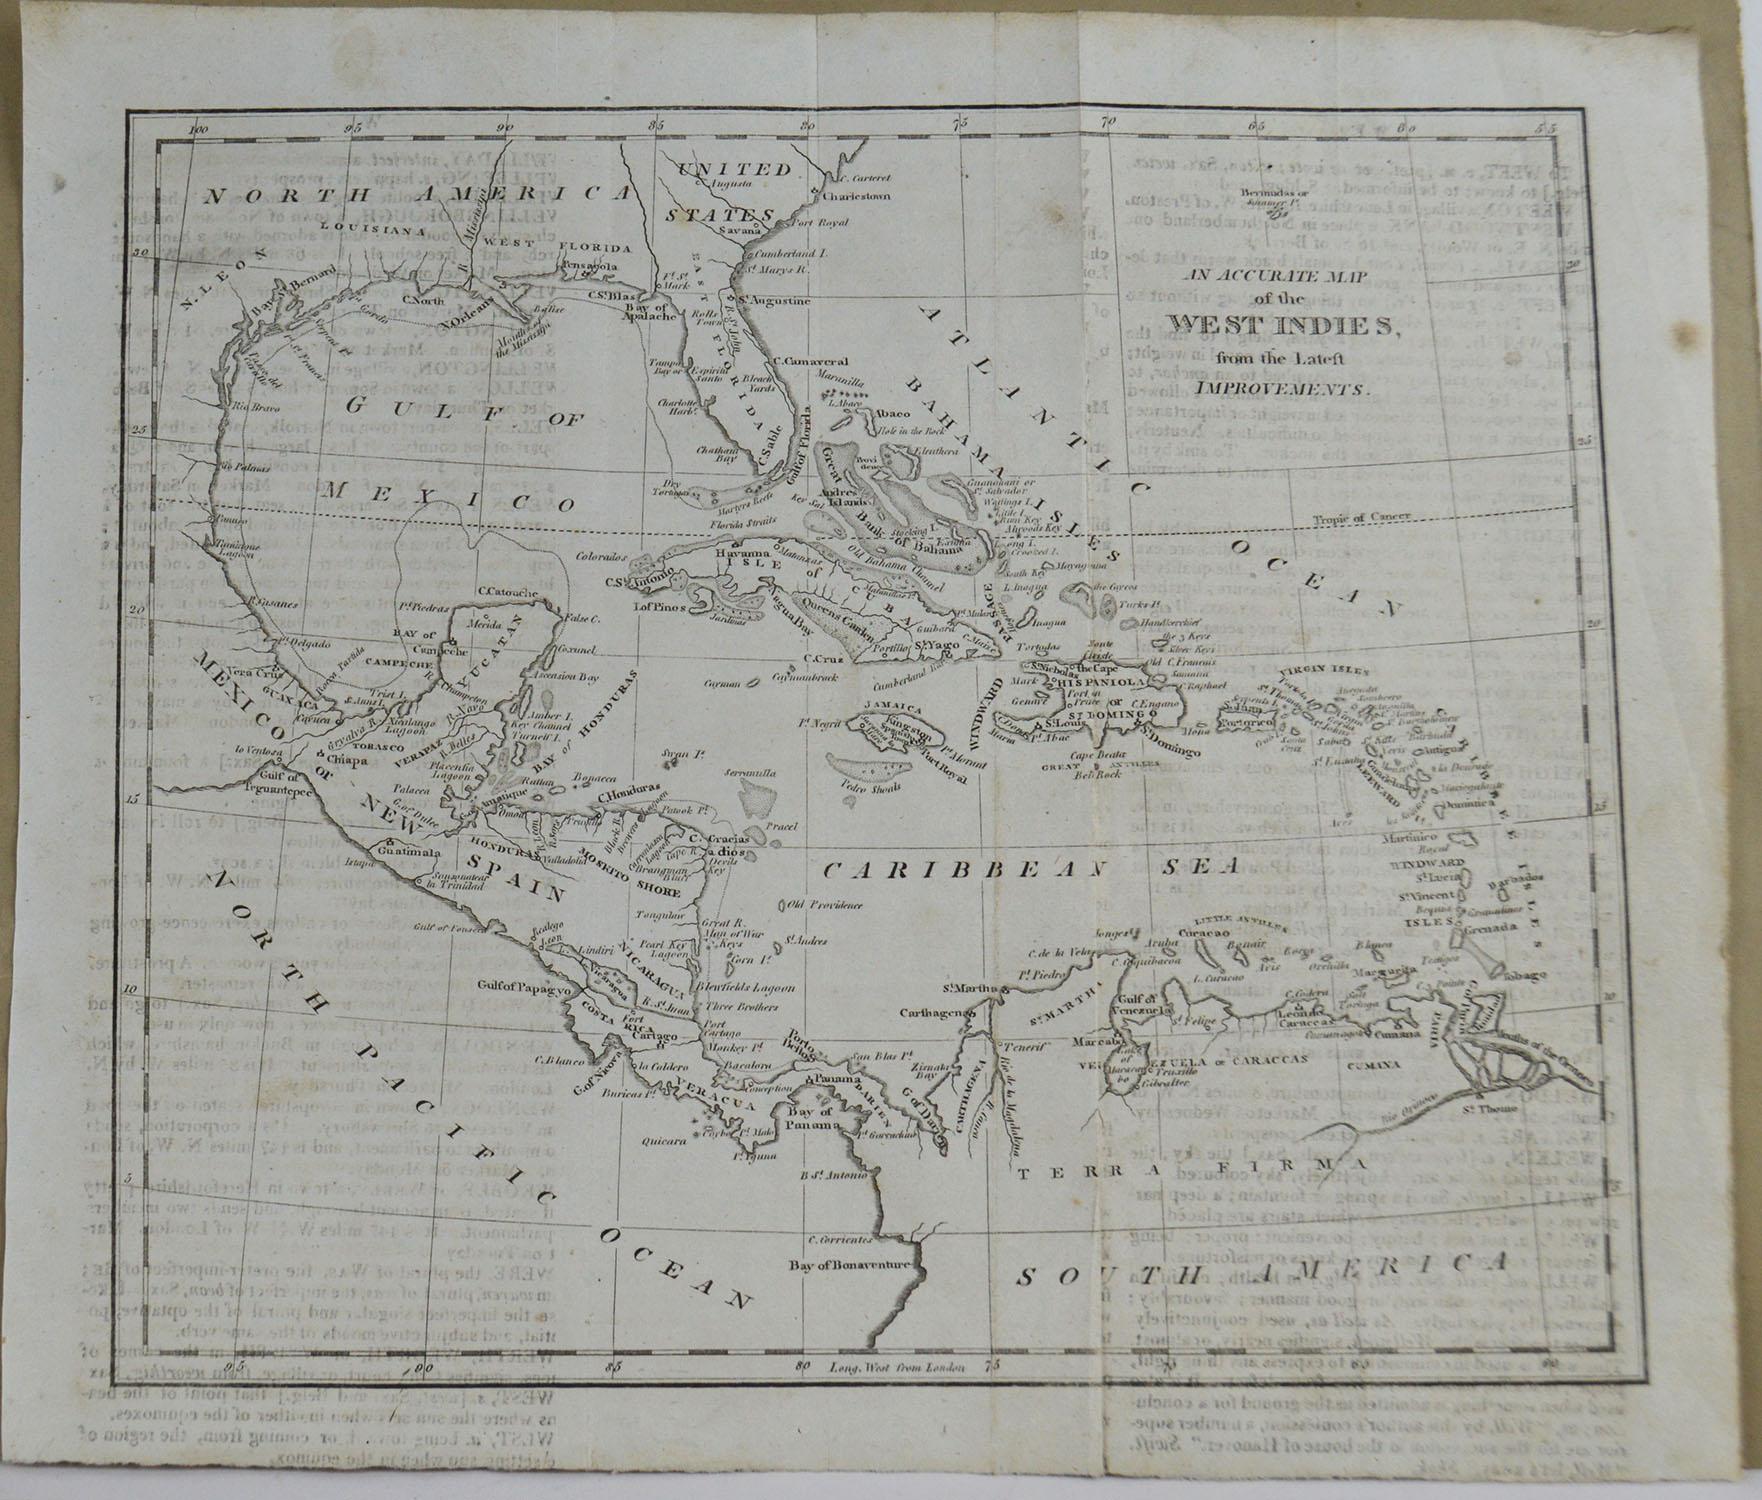 Other Original Antique Map of Florida & The Caribbean, circa 1800